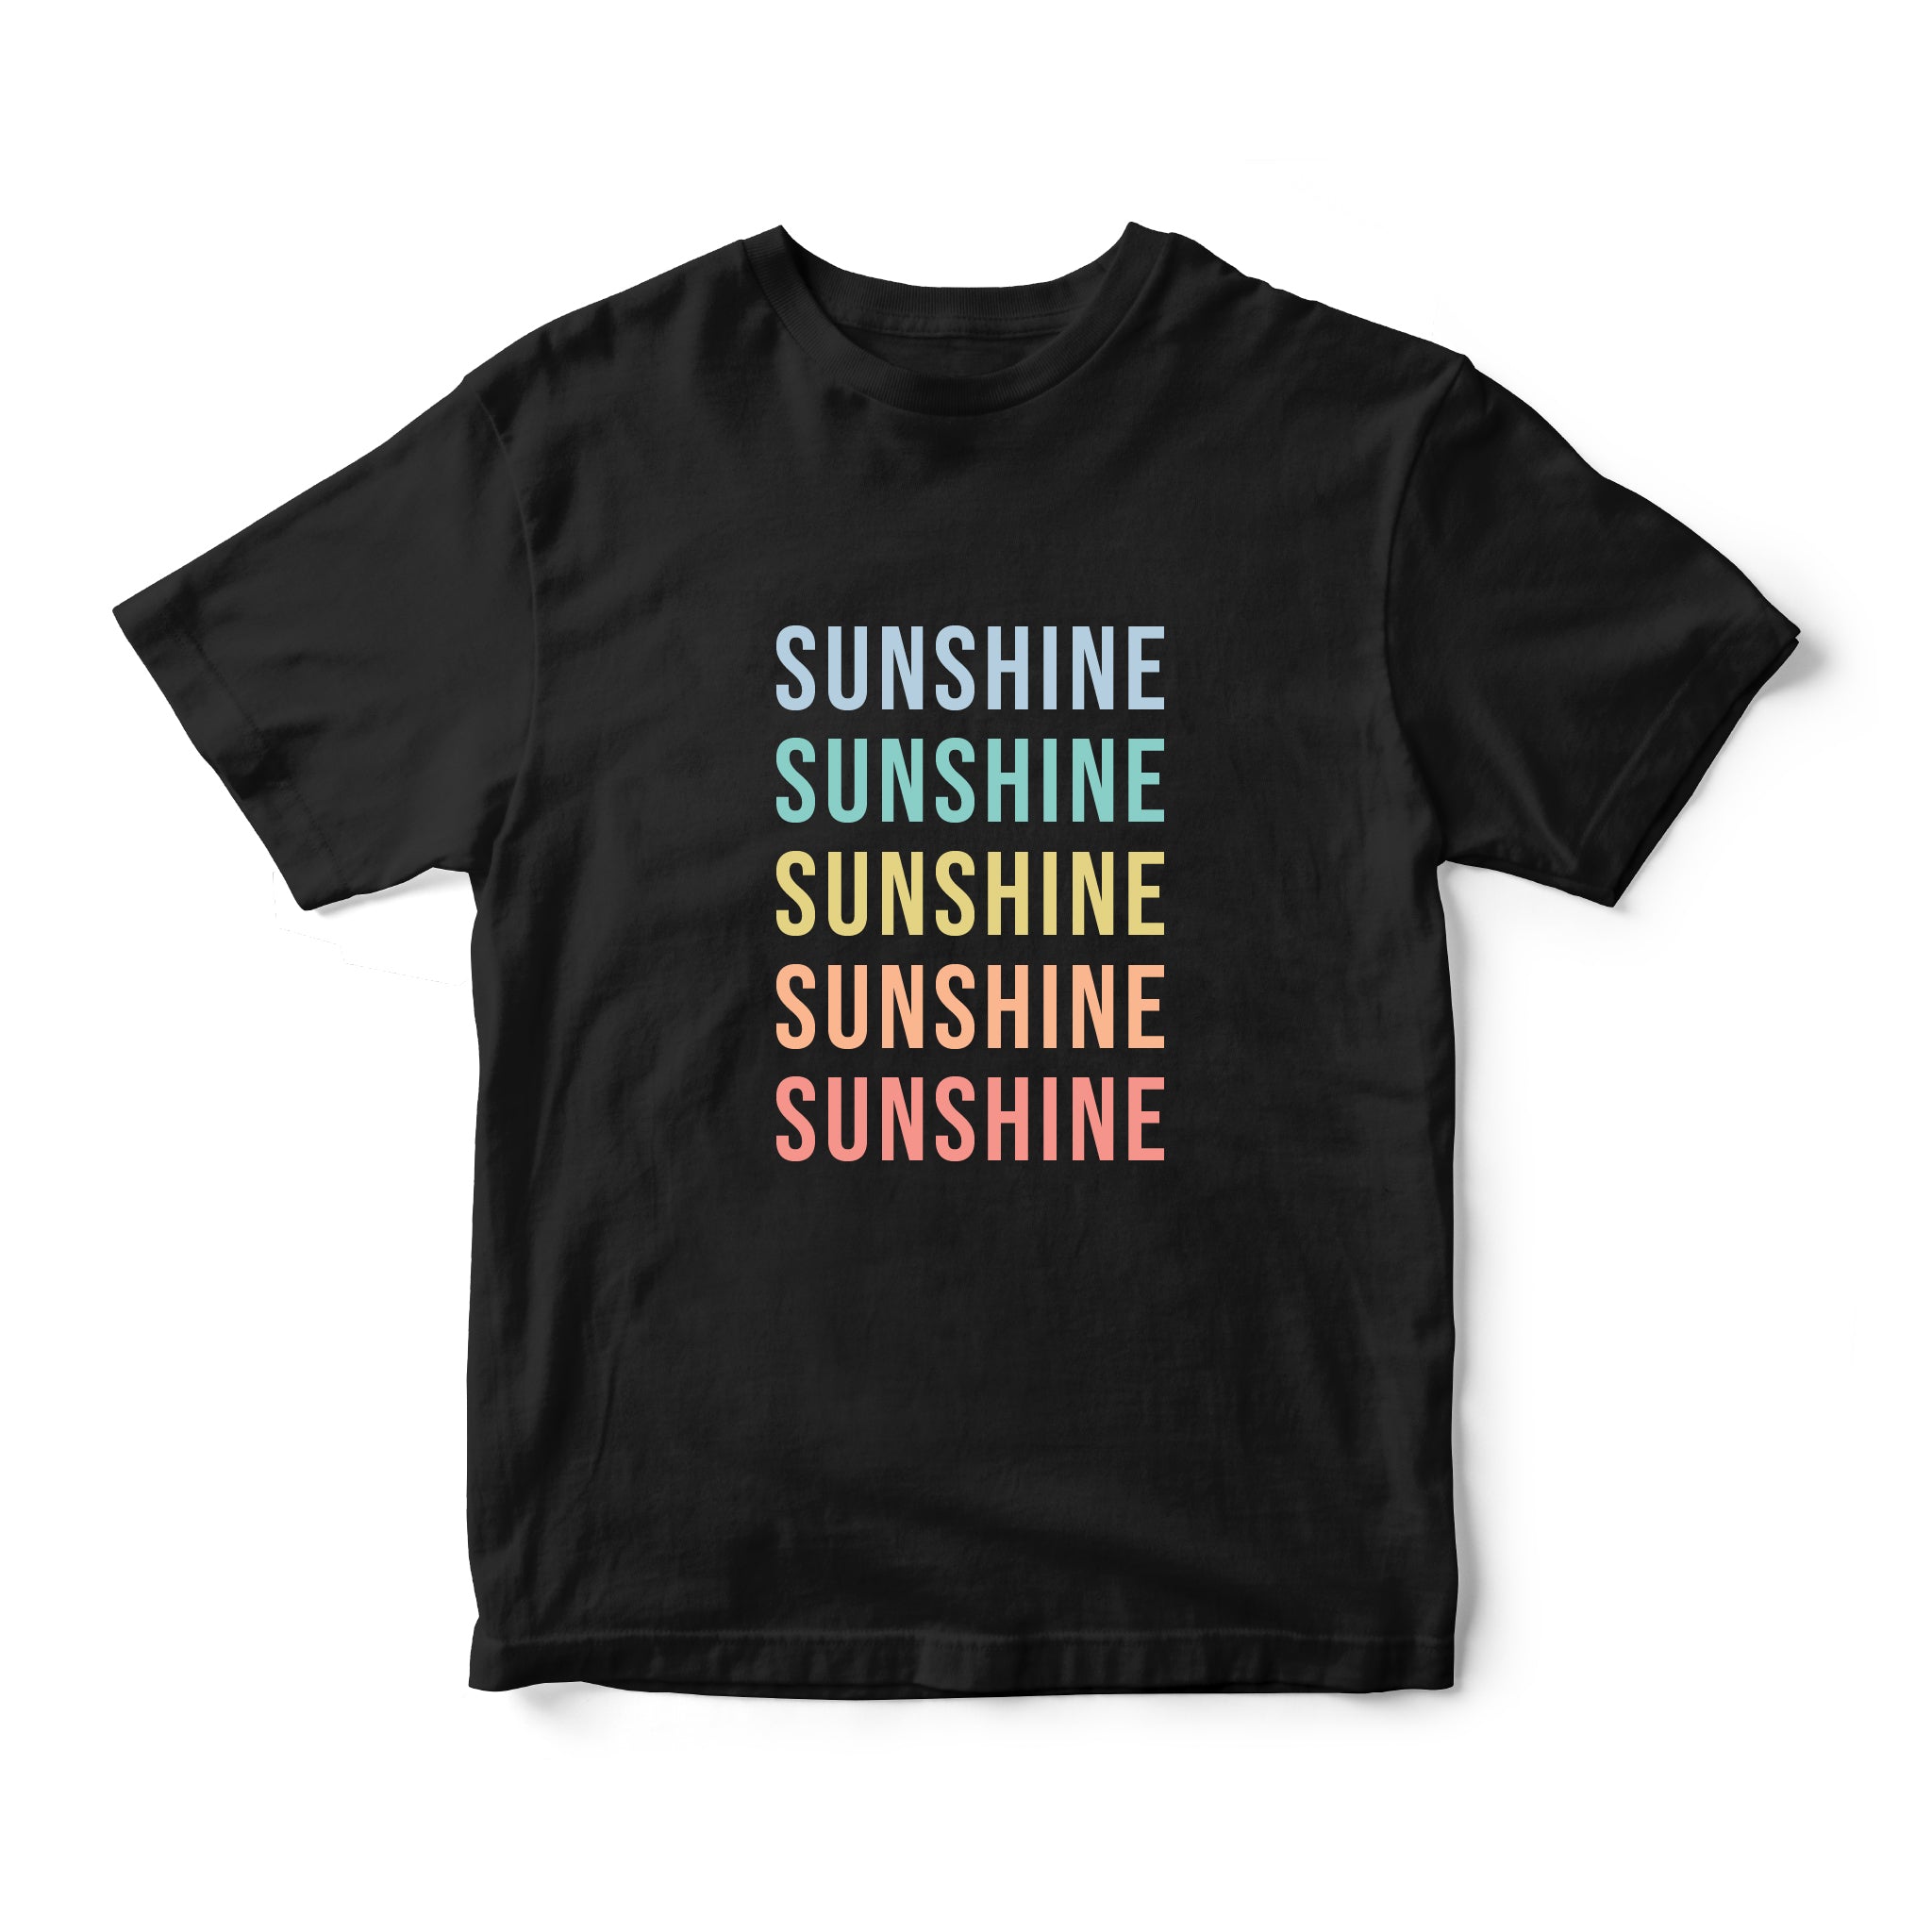 Instee Sunshine T-shirt Unisex 100% Cotton